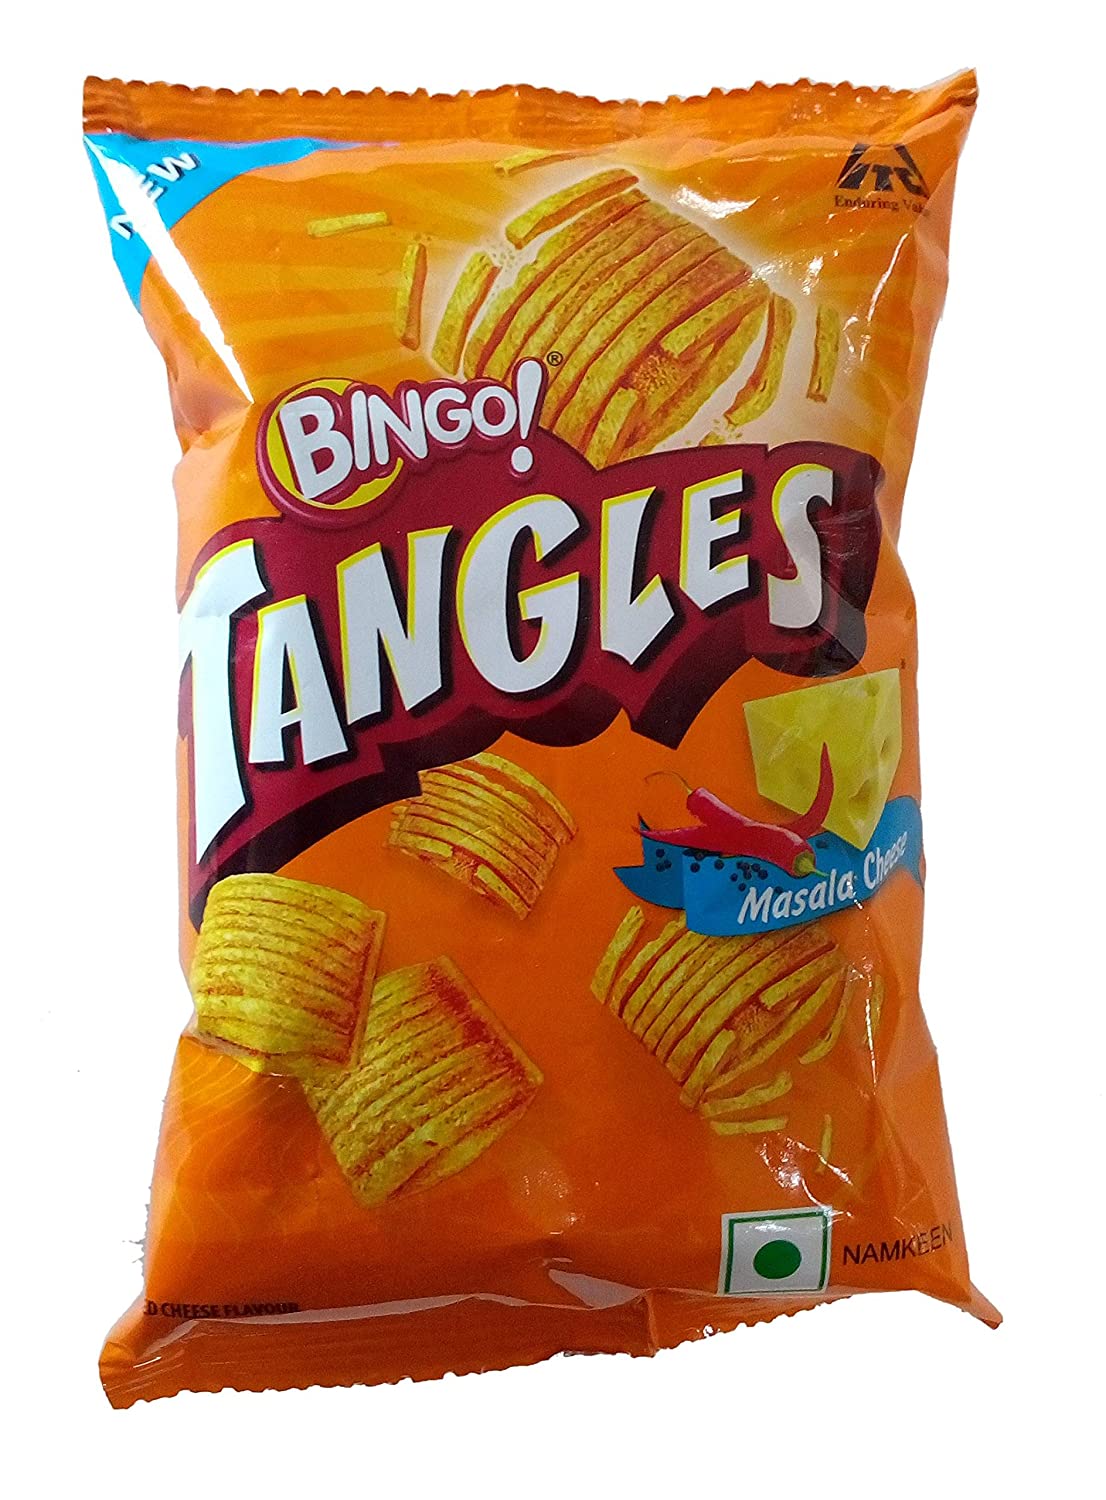 Bingo Snacks - Masala Cheese Tangles, 27g Pouch